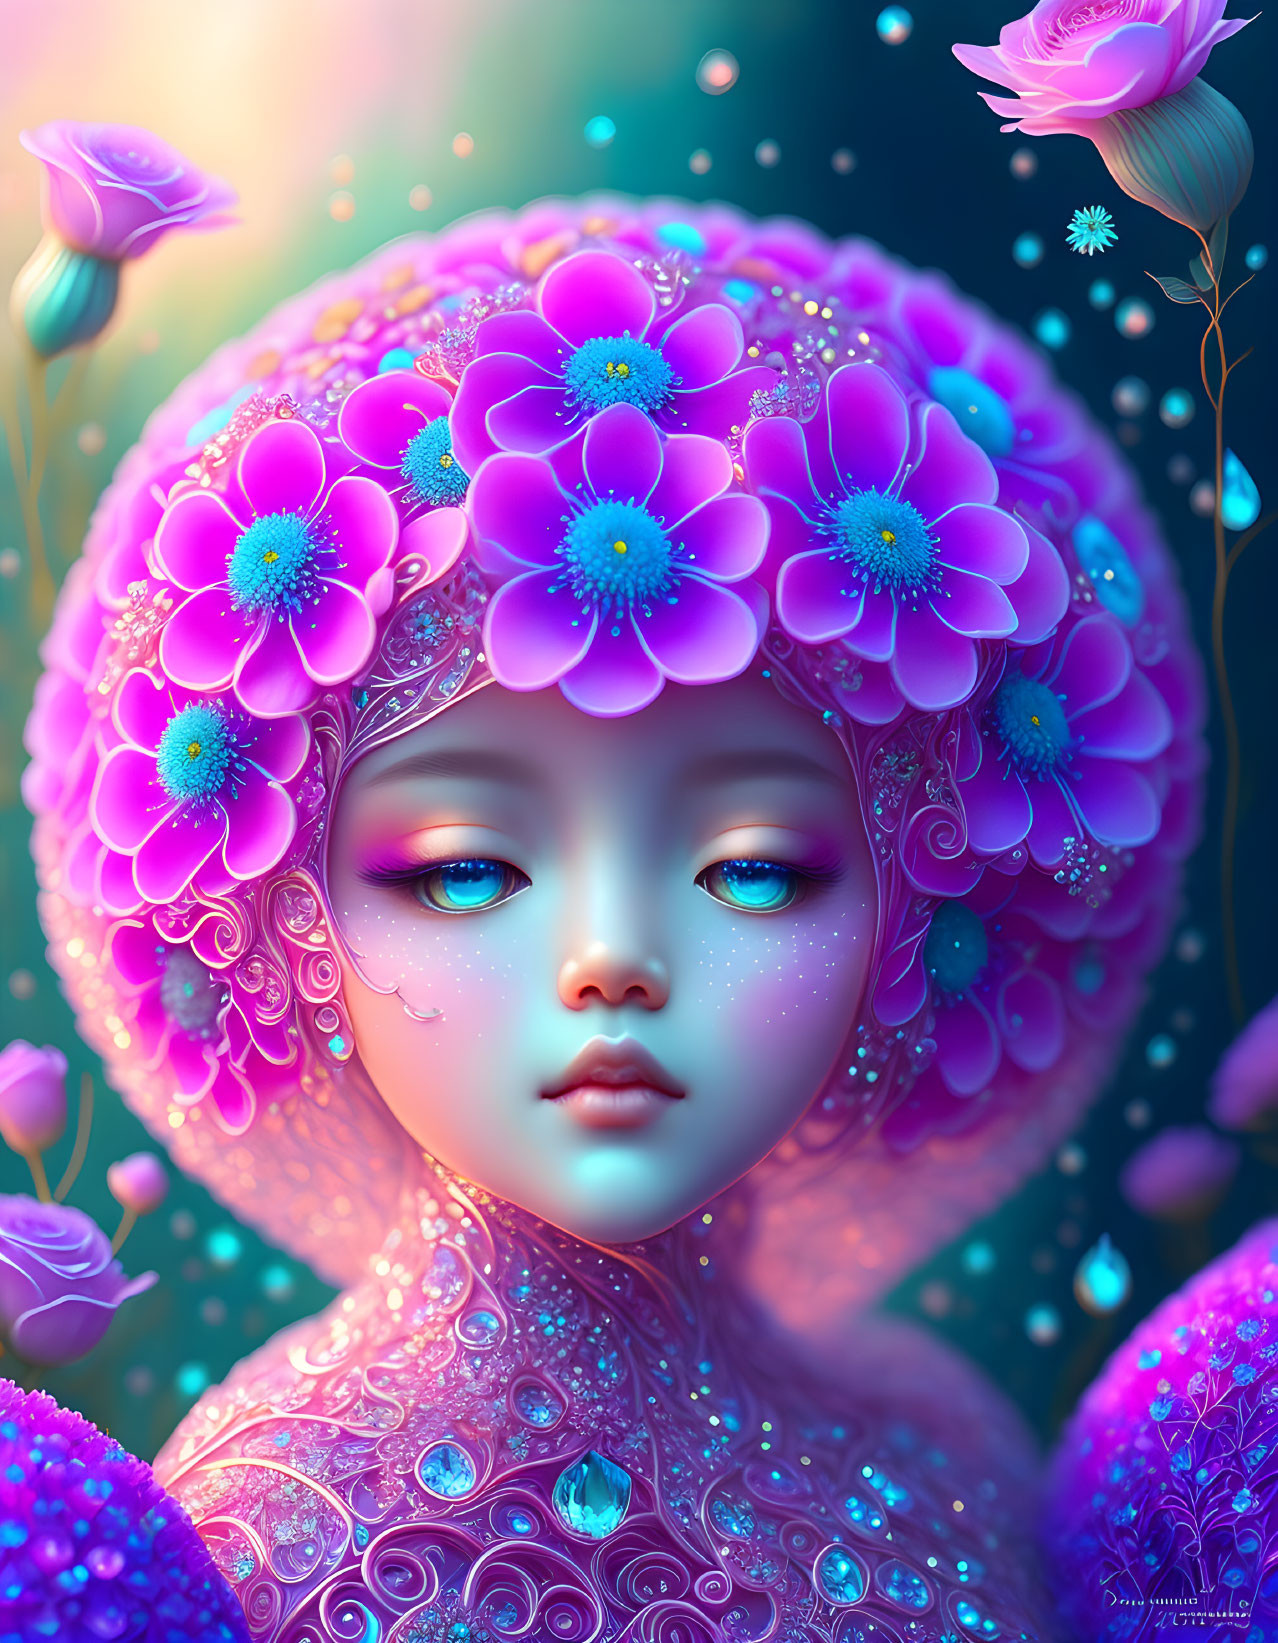 Digital artwork: Female figure with floral headpiece and ornate attire